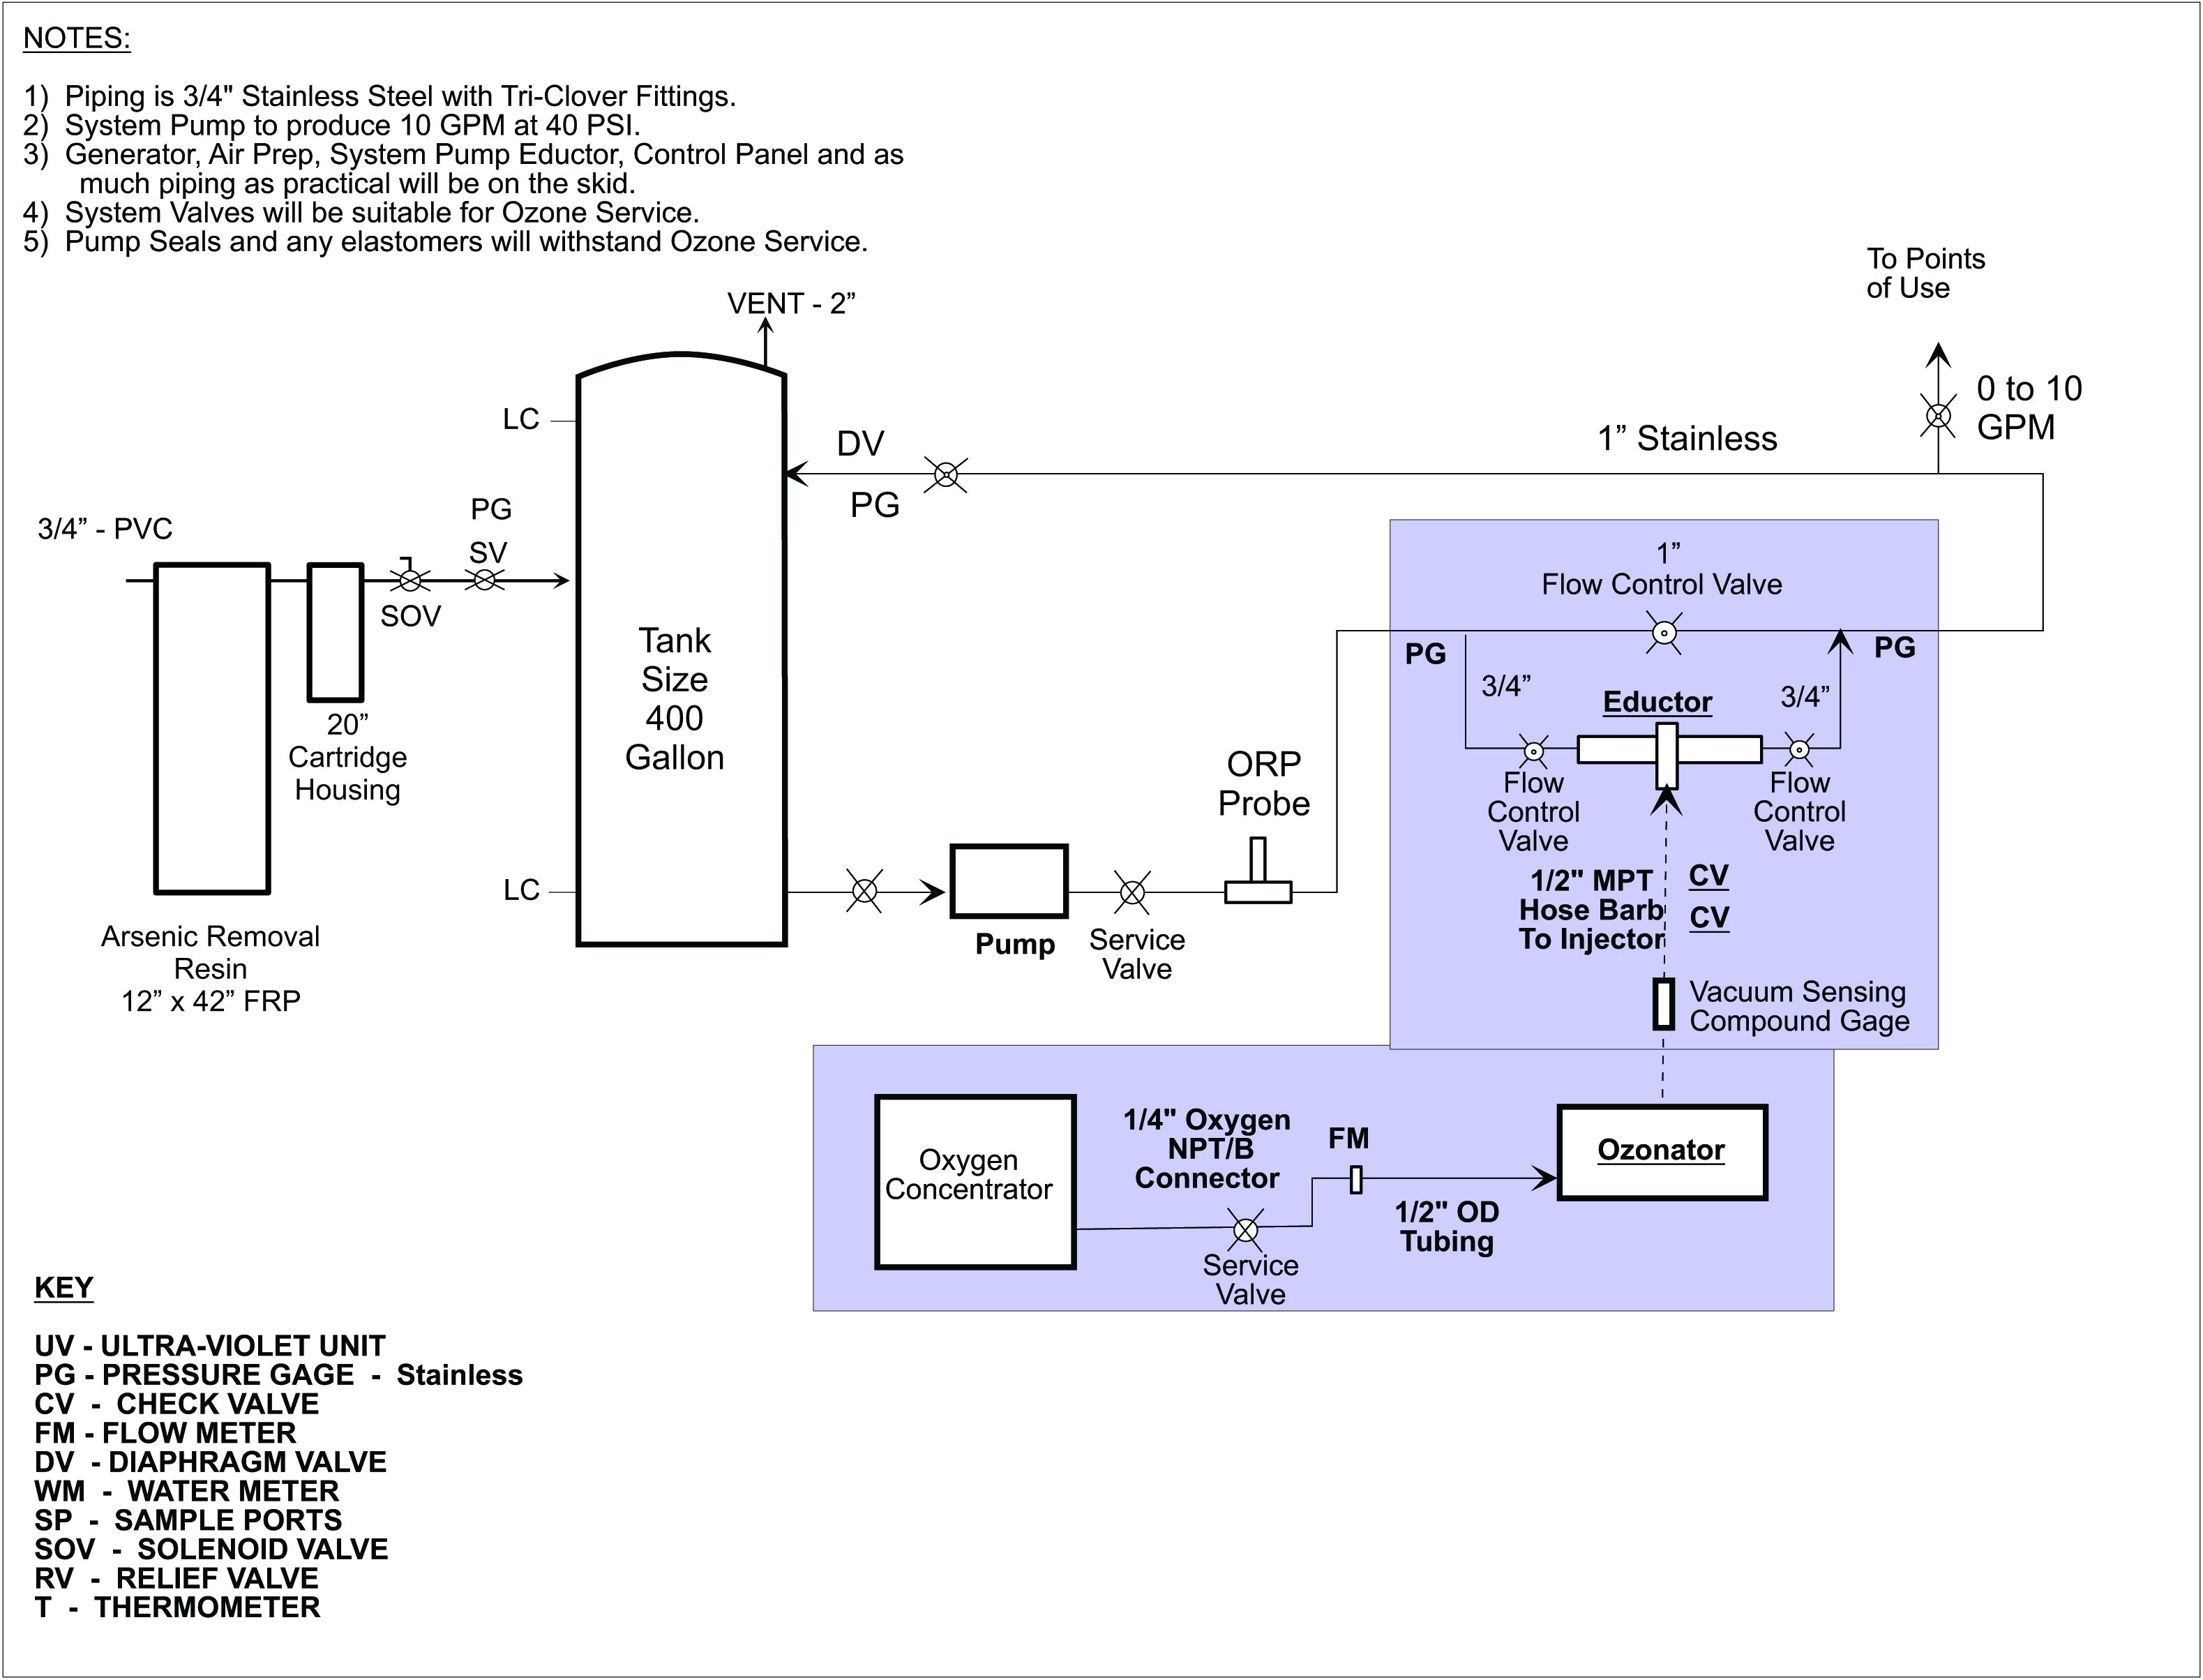 pulse generator 1 circuit diagram tradeoficcom data wiring diagram pulse generator 1 circuit diagram tradeoficcom